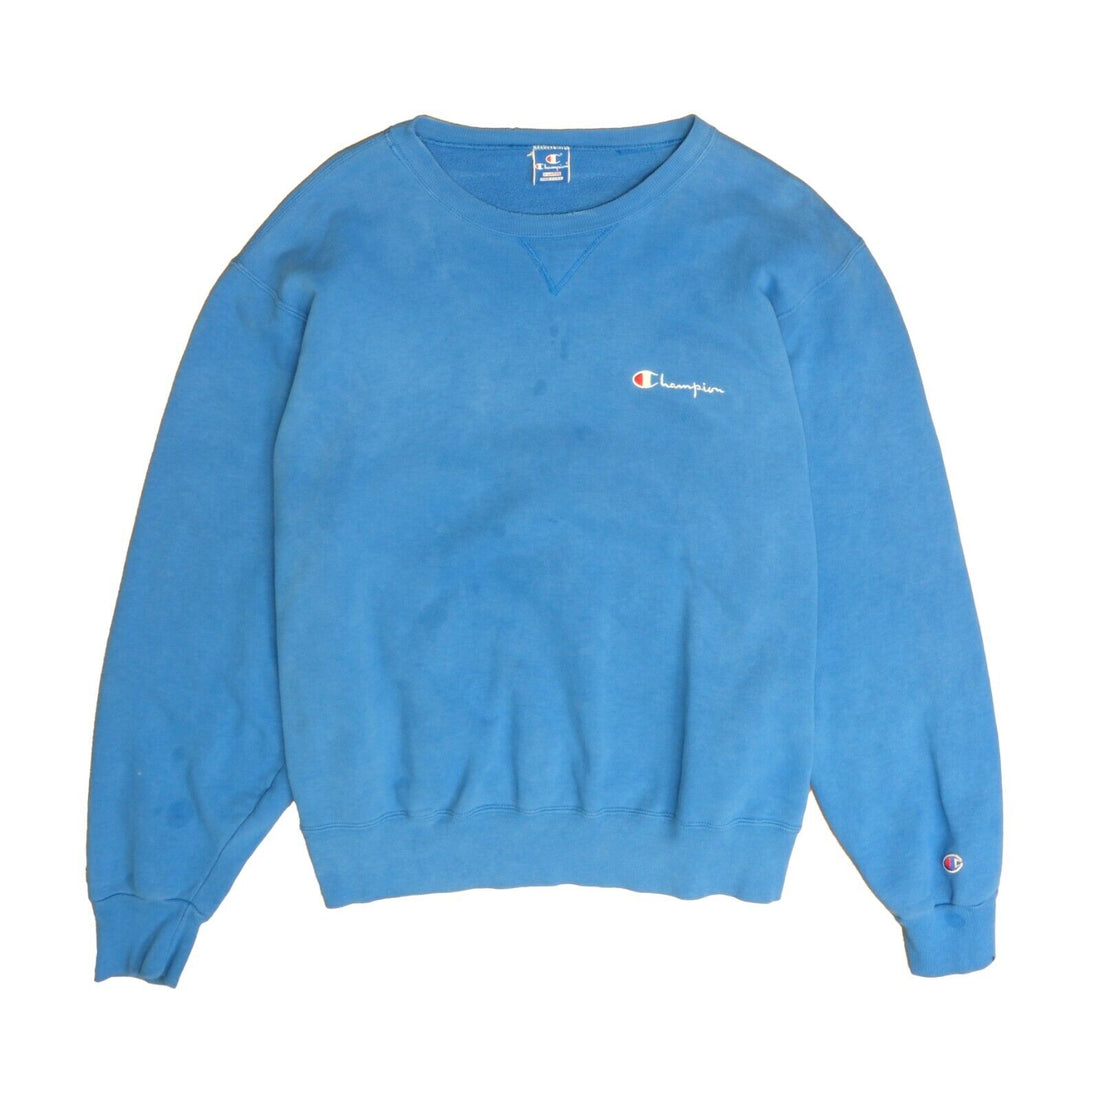 Vintage Champion Spell Out Sweatshirt Crewneck Size XL Blue 80s